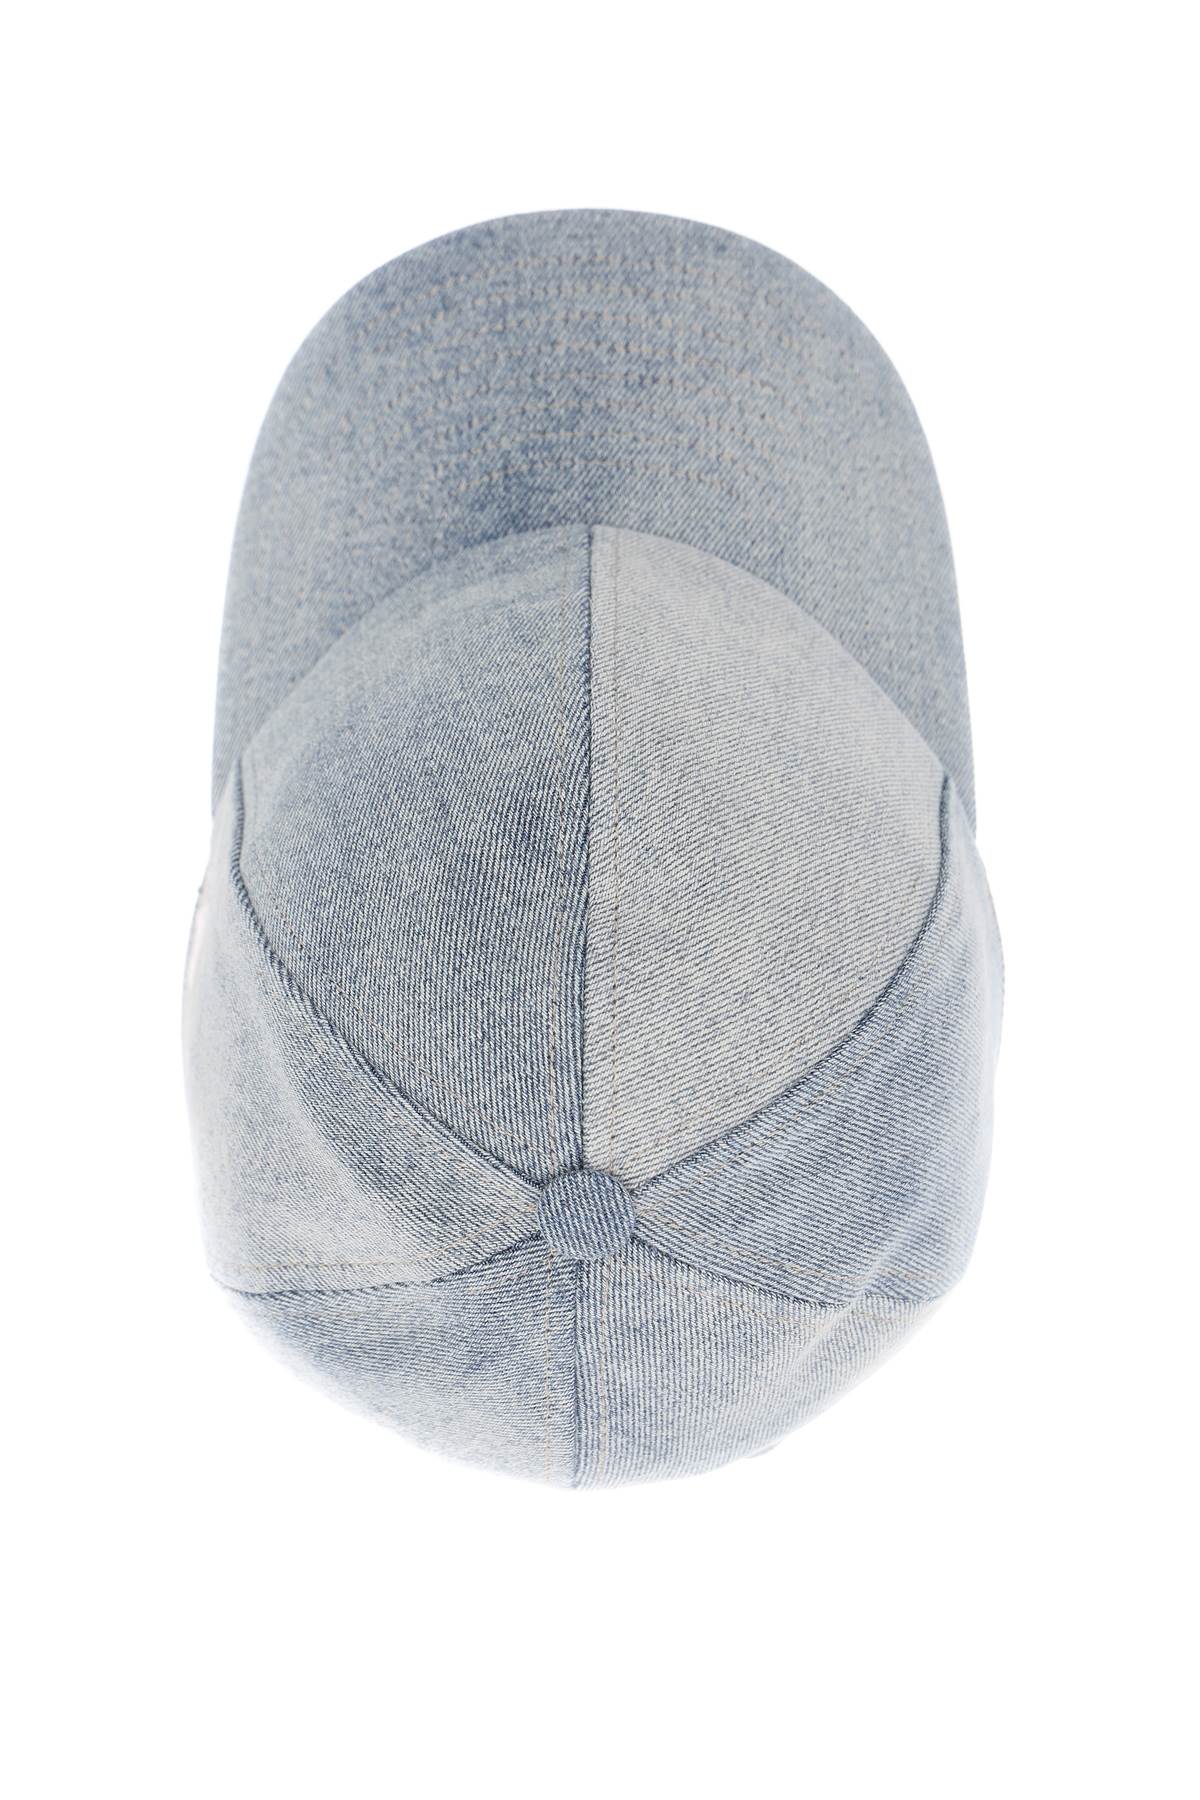 Courreges denim baseball cap with adjustable-1